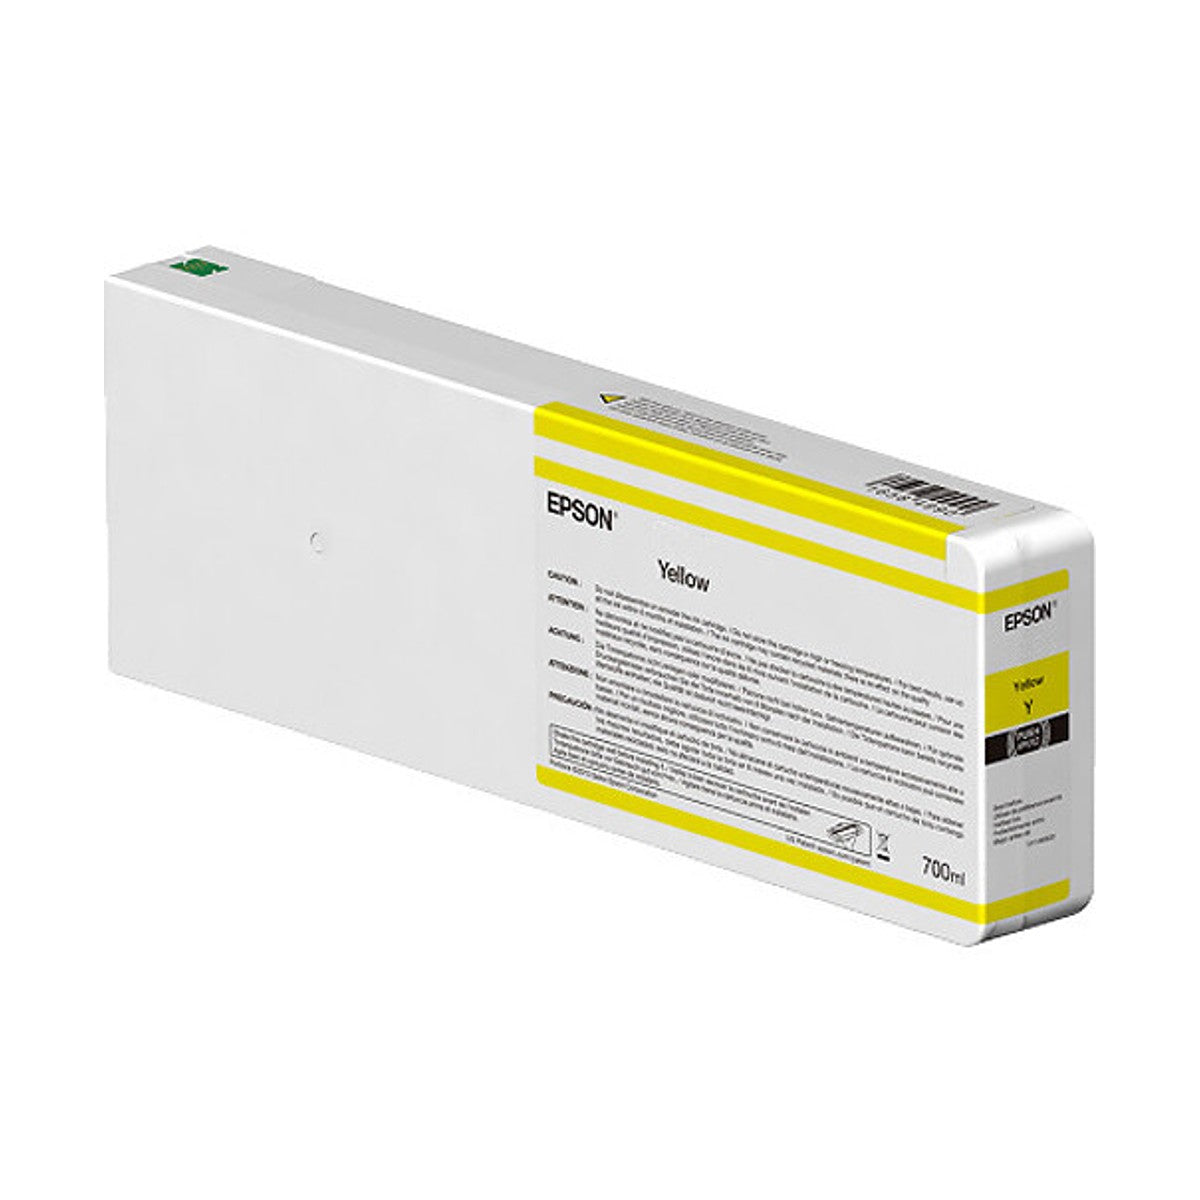 Epson T55K400 P6000/P7000/P8000/P9000 Ultrachrome HD Ink 700ml Yellow